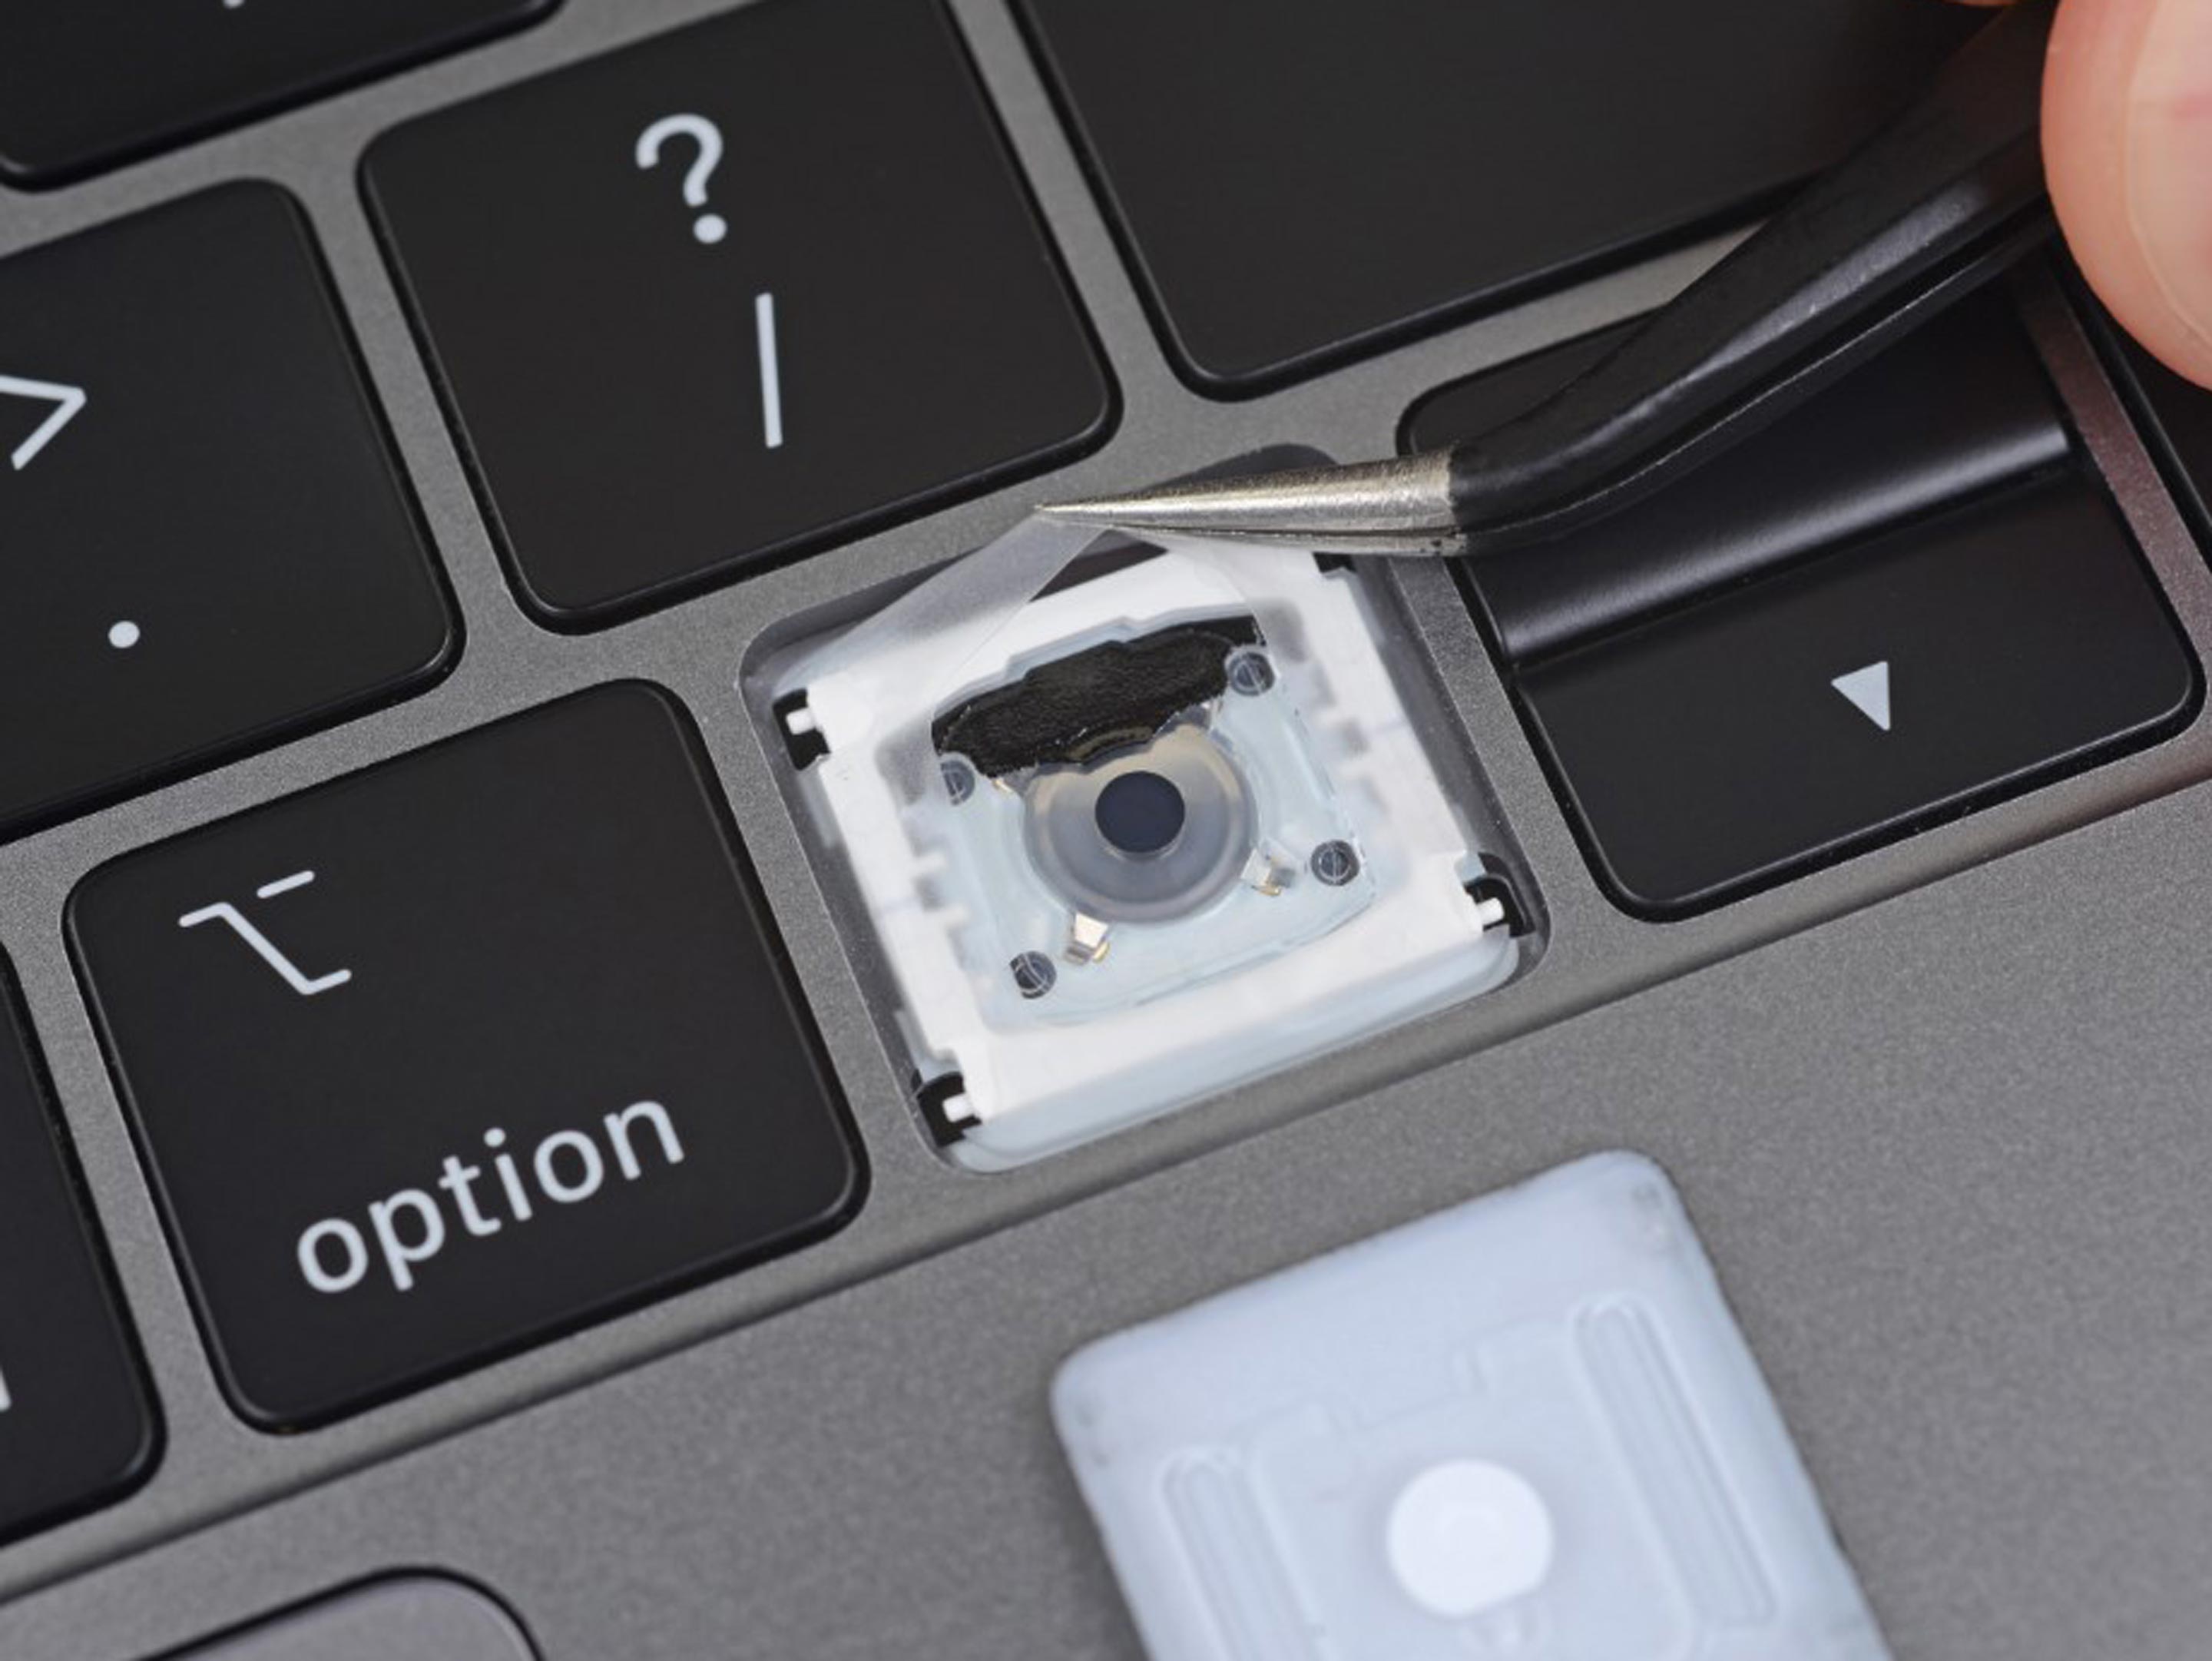 base model MacBook Pro gen 3.5 butteryfly key switches